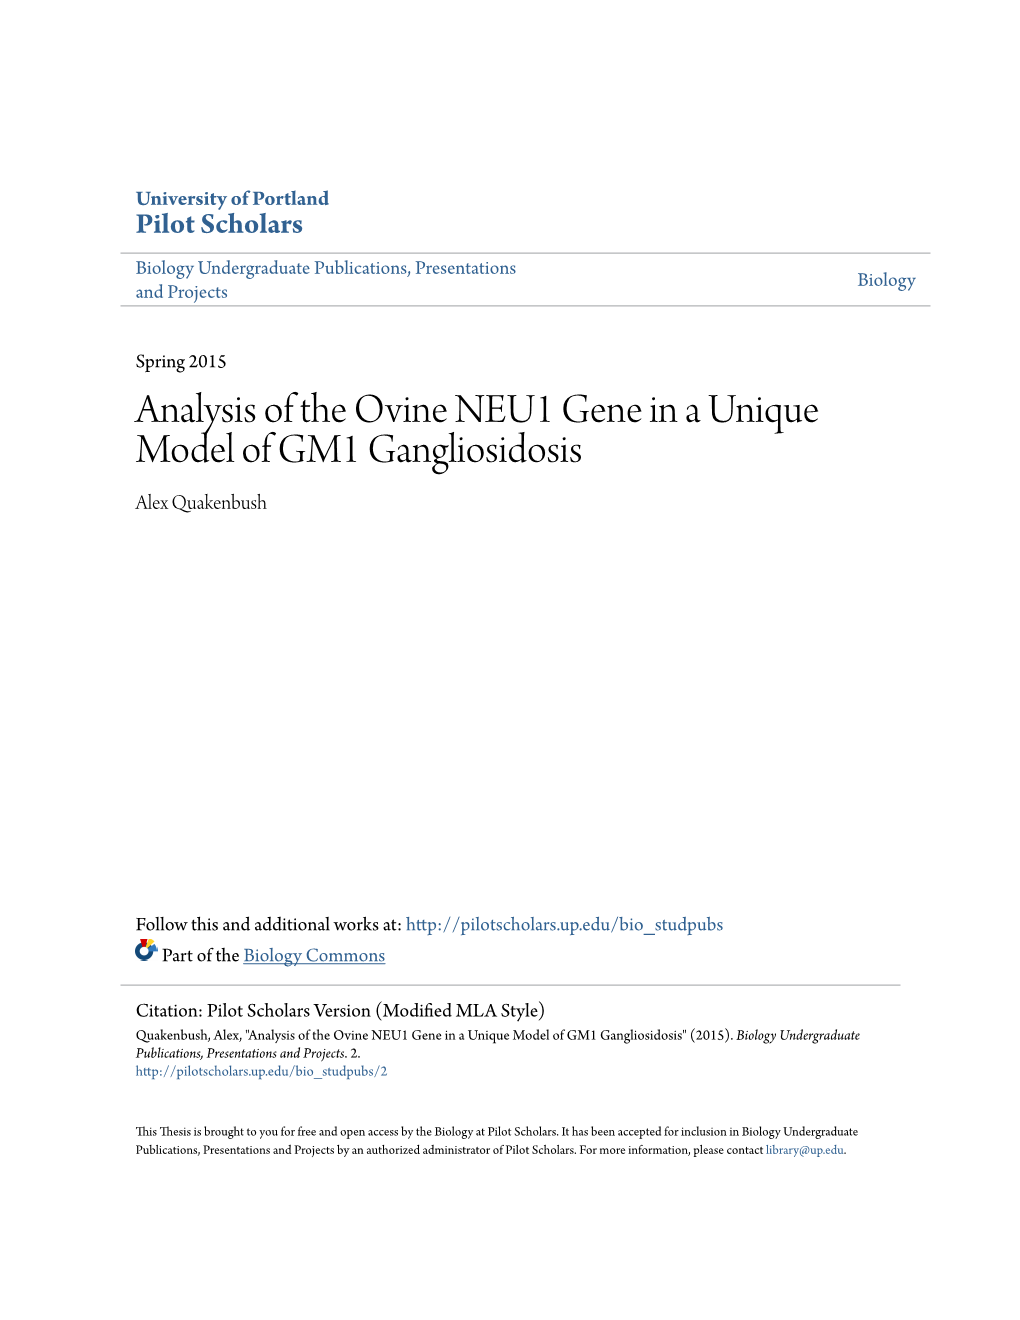 Analysis of the Ovine NEU1 Gene in a Unique Model of GM1 Gangliosidosis Alex Quakenbush